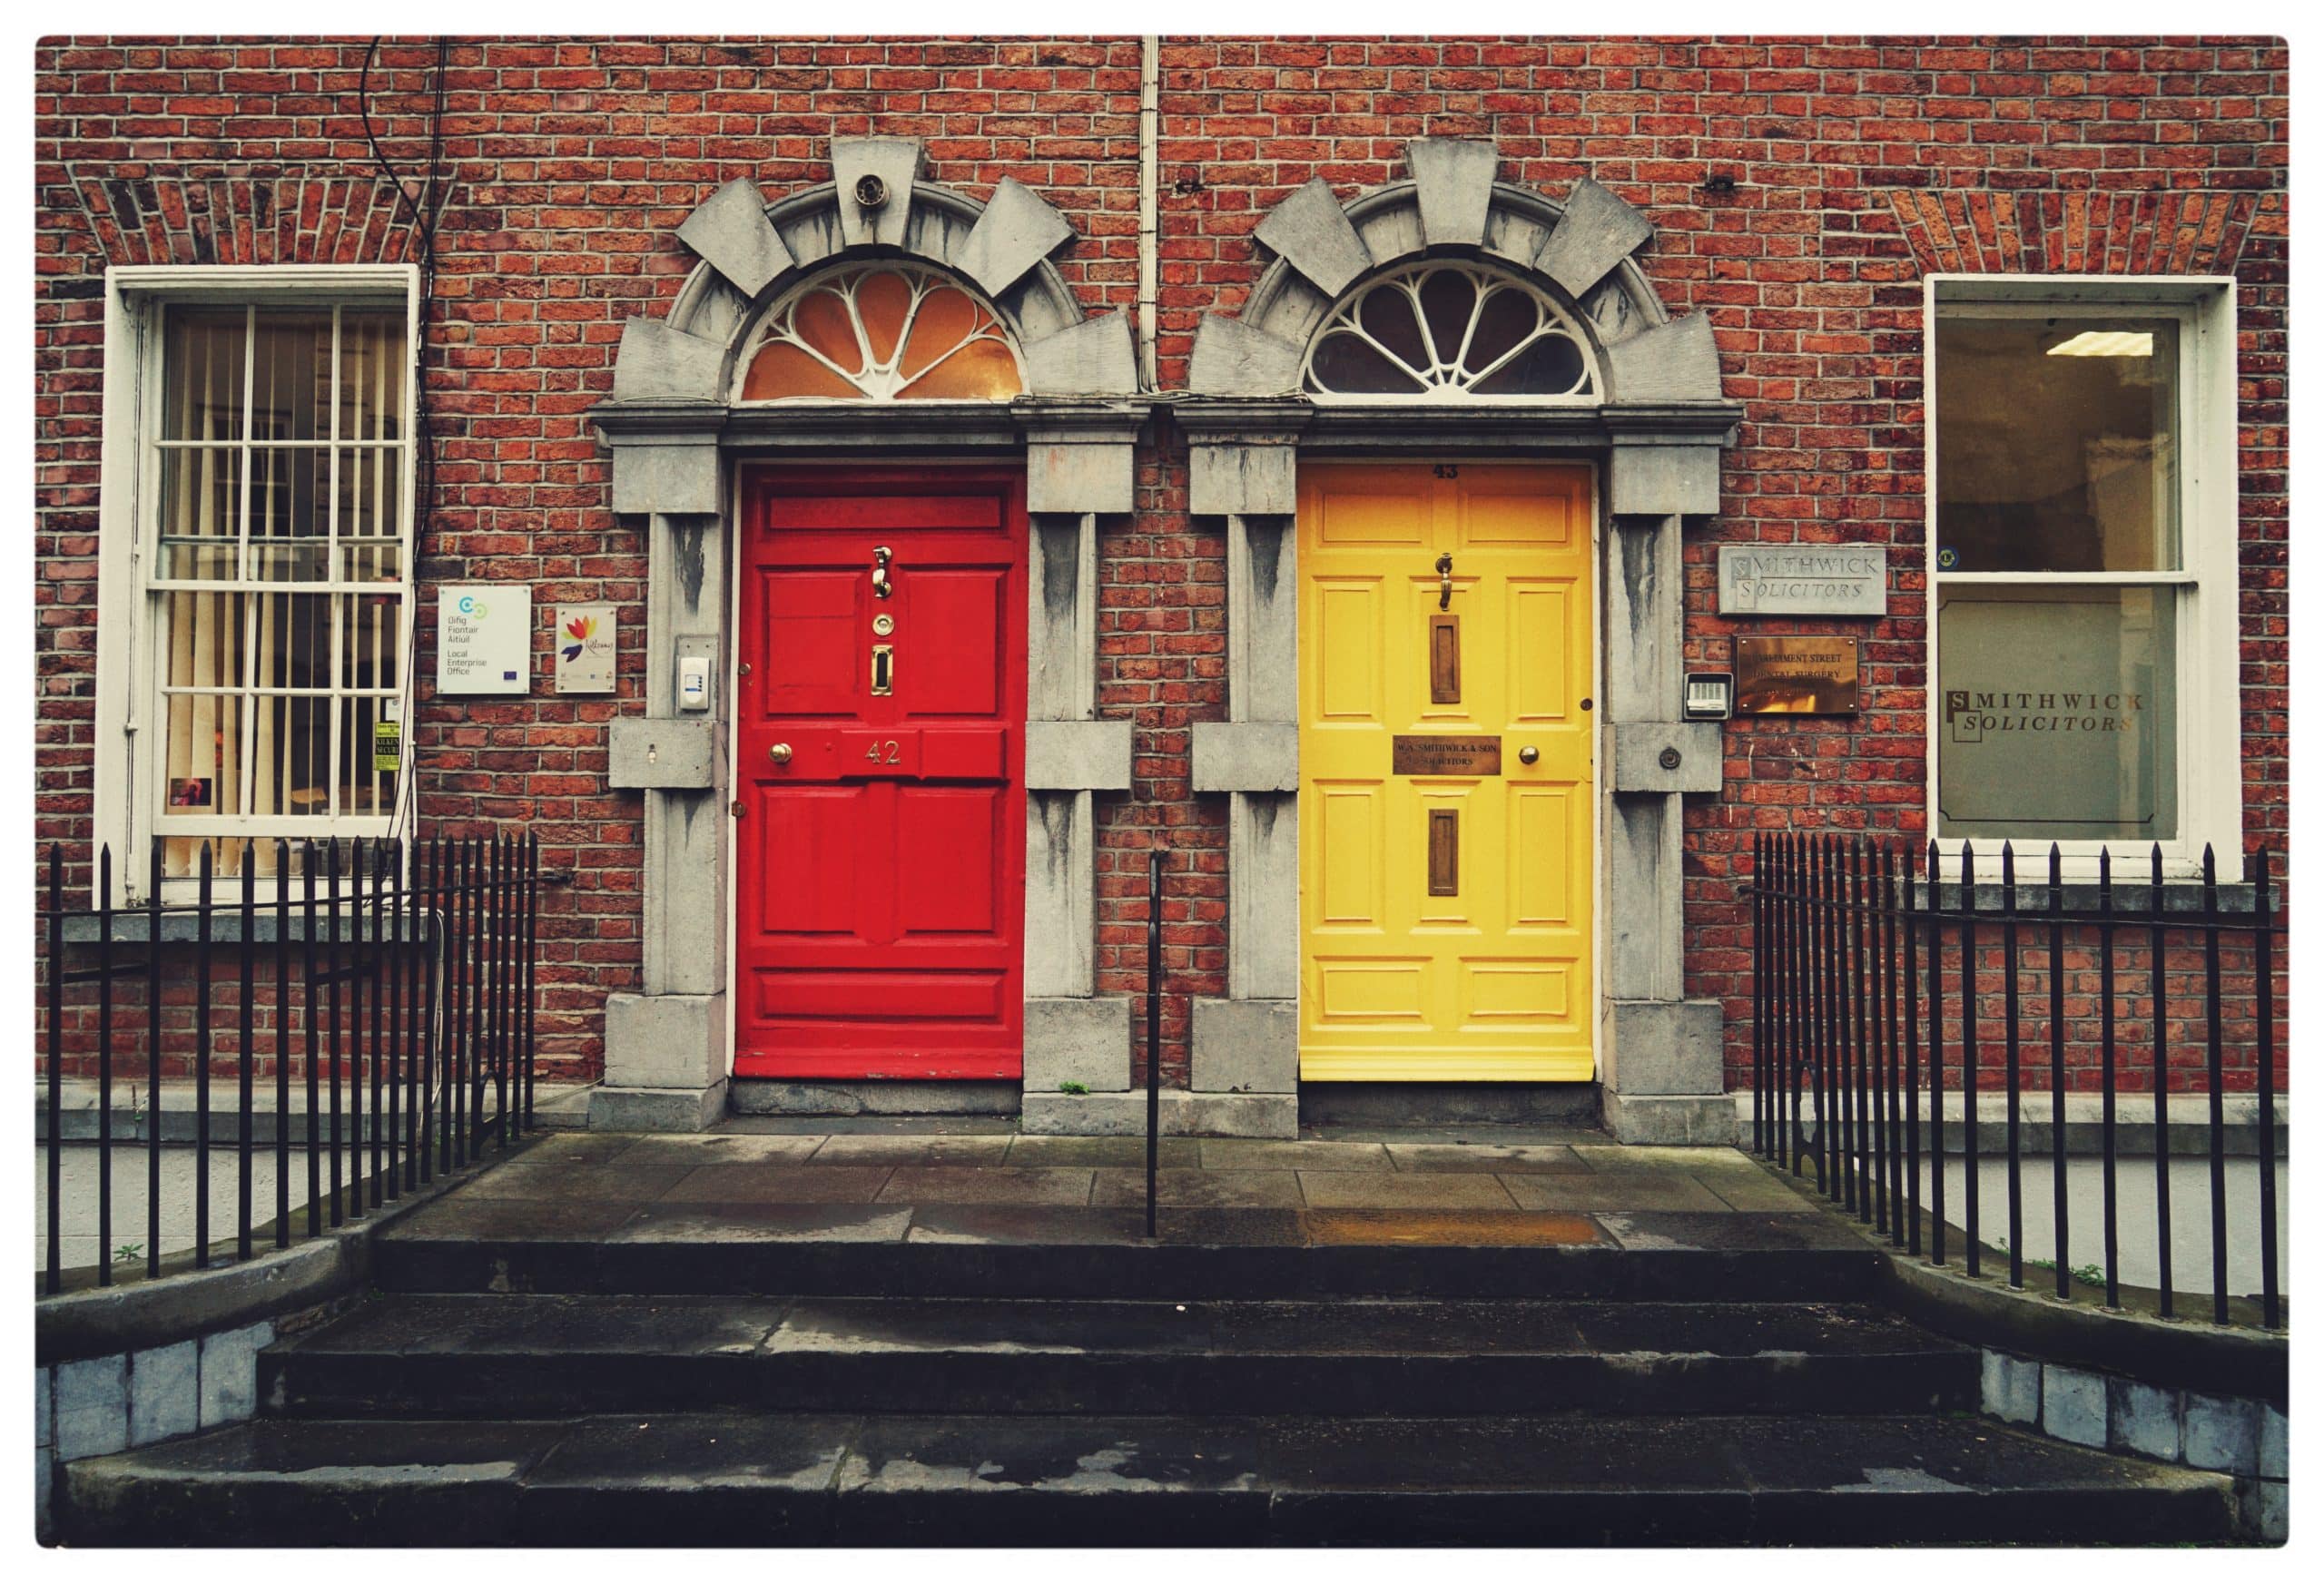 Two doors represent choosing an affiliate marketing platform